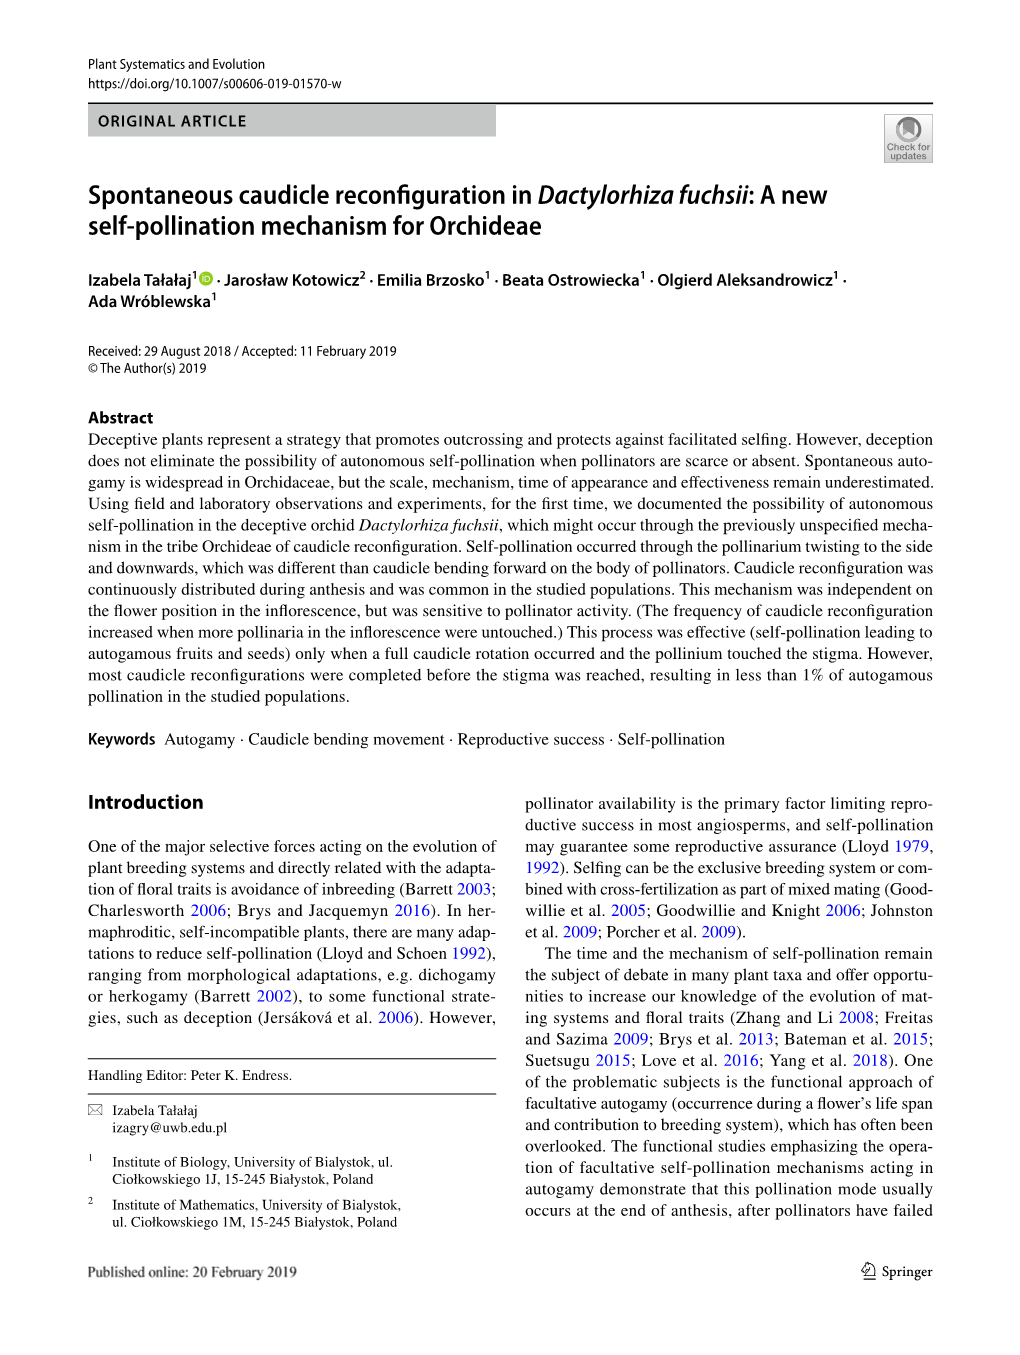 Spontaneous Caudicle Reconfiguration in Dactylorhiza Fuchsii: a New Self